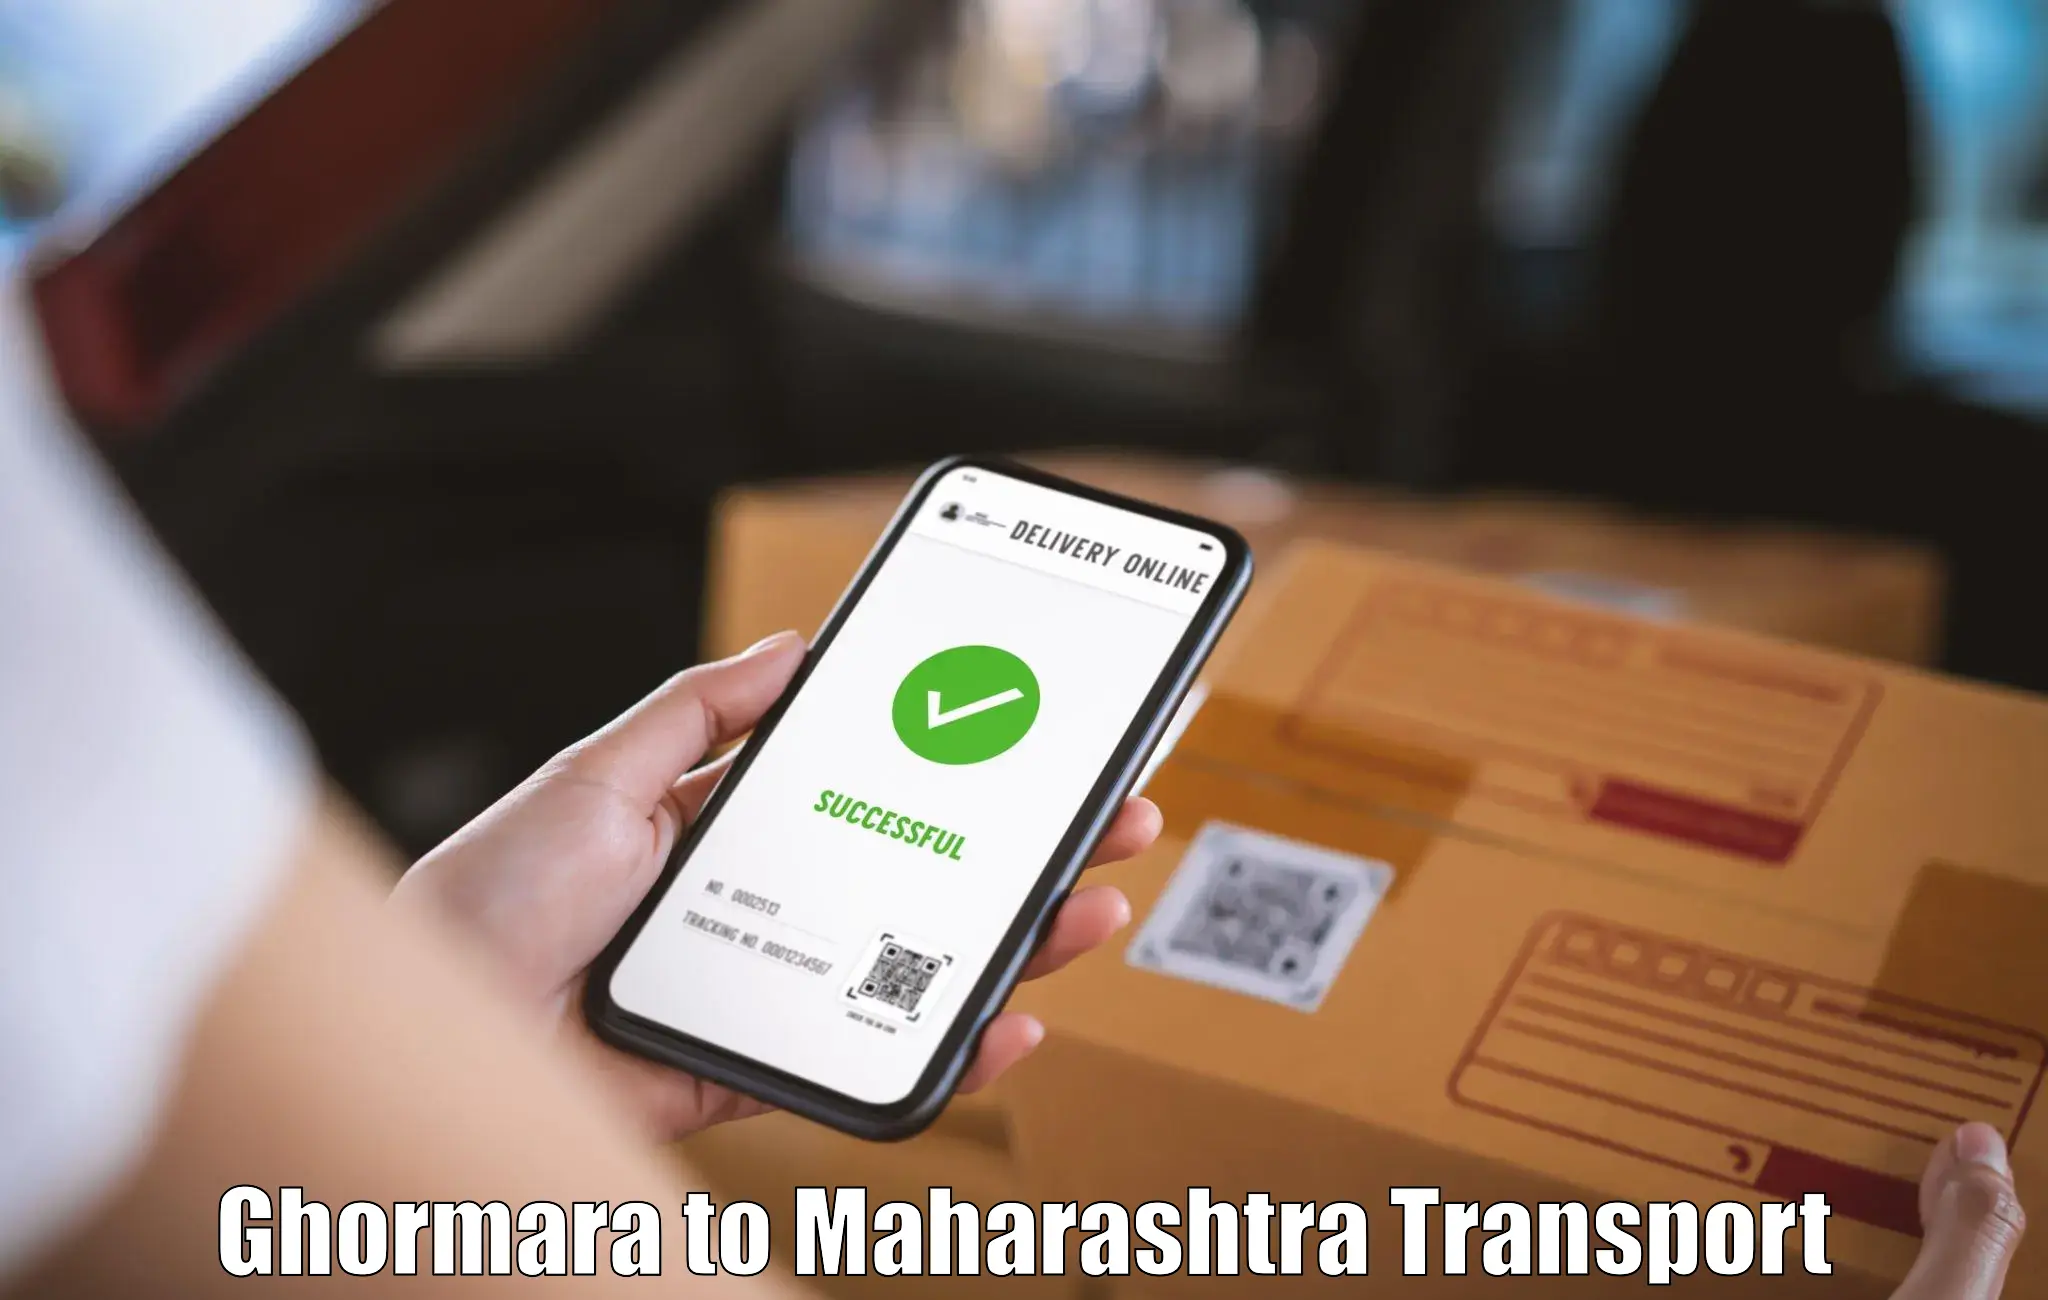 Bike transport service Ghormara to Maharashtra